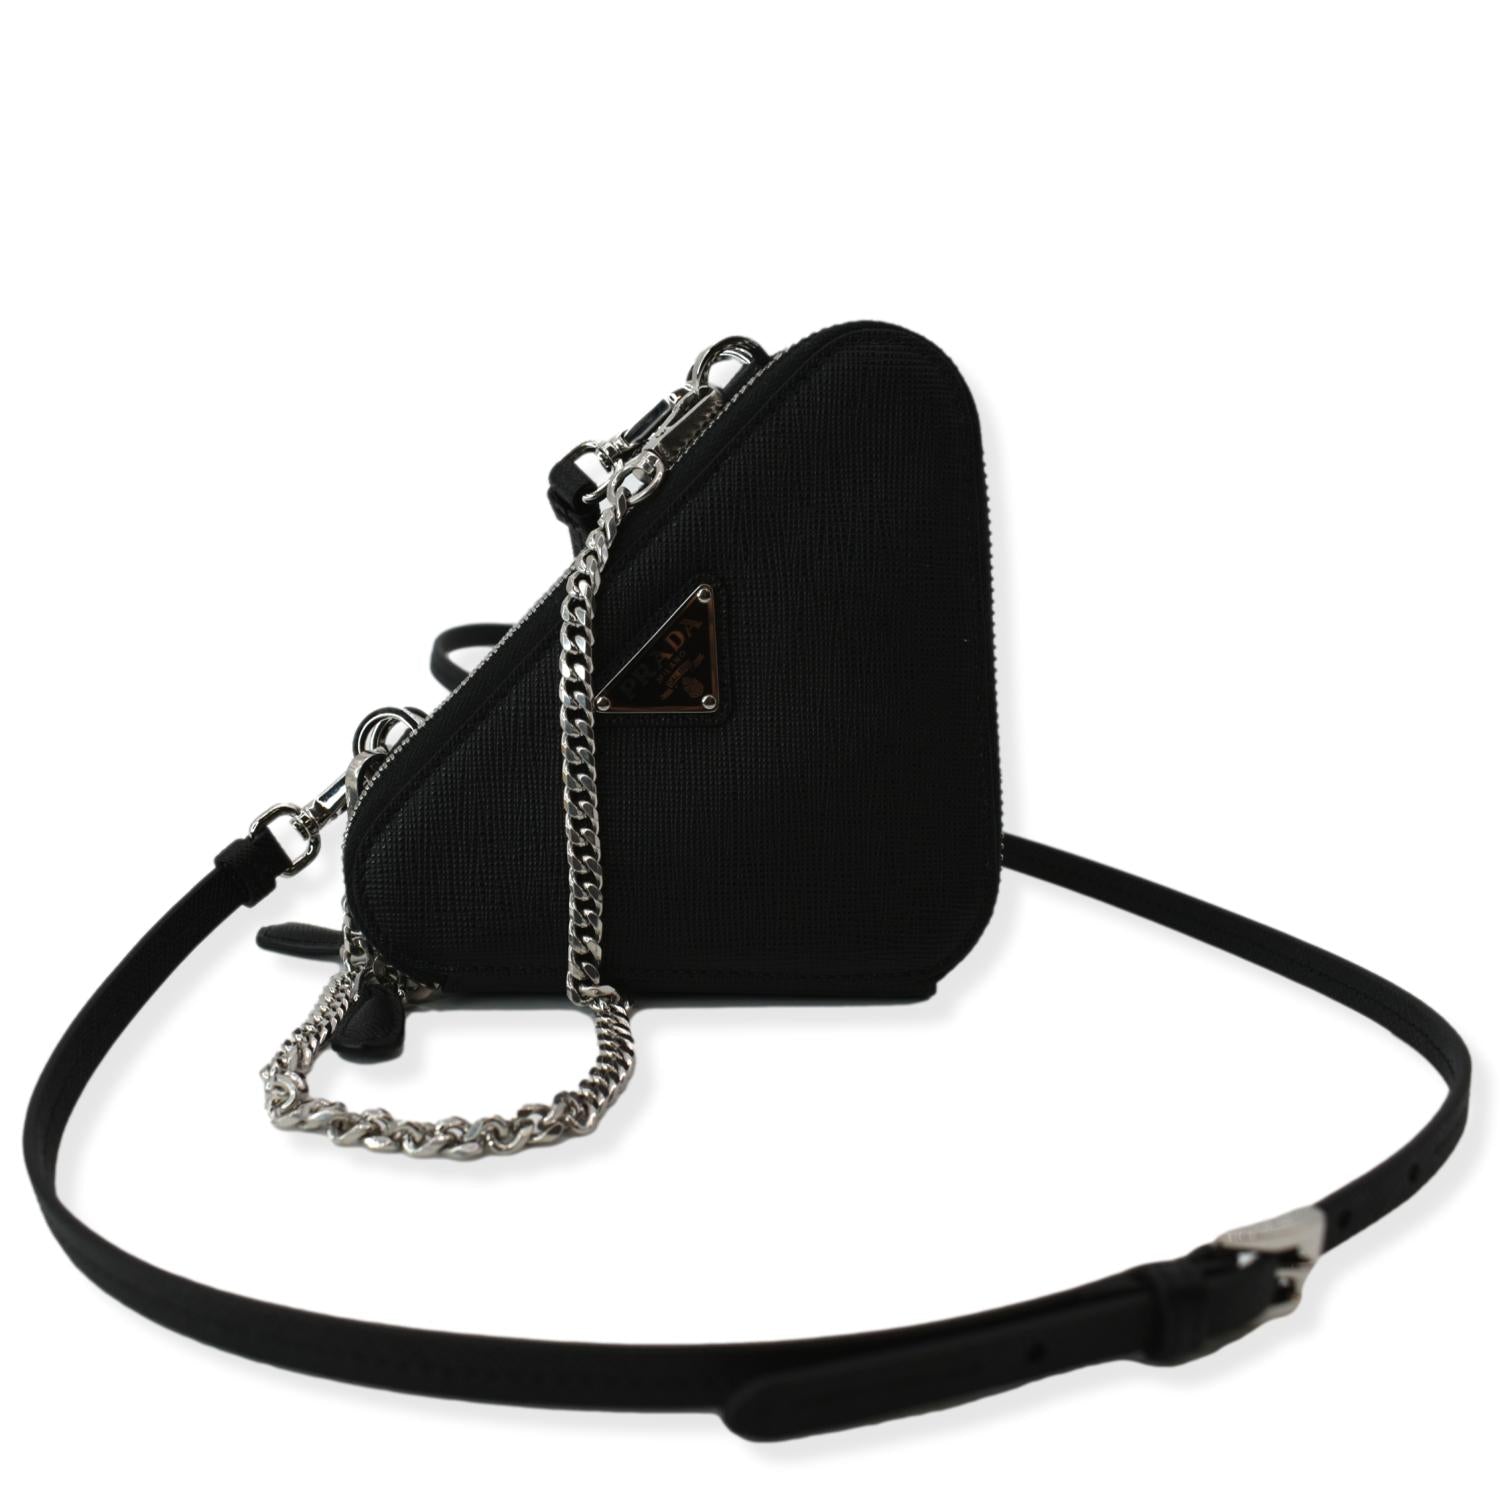 Prada Triangle Logo Black Saffiano Lux Leather Crossbody Tote Bag